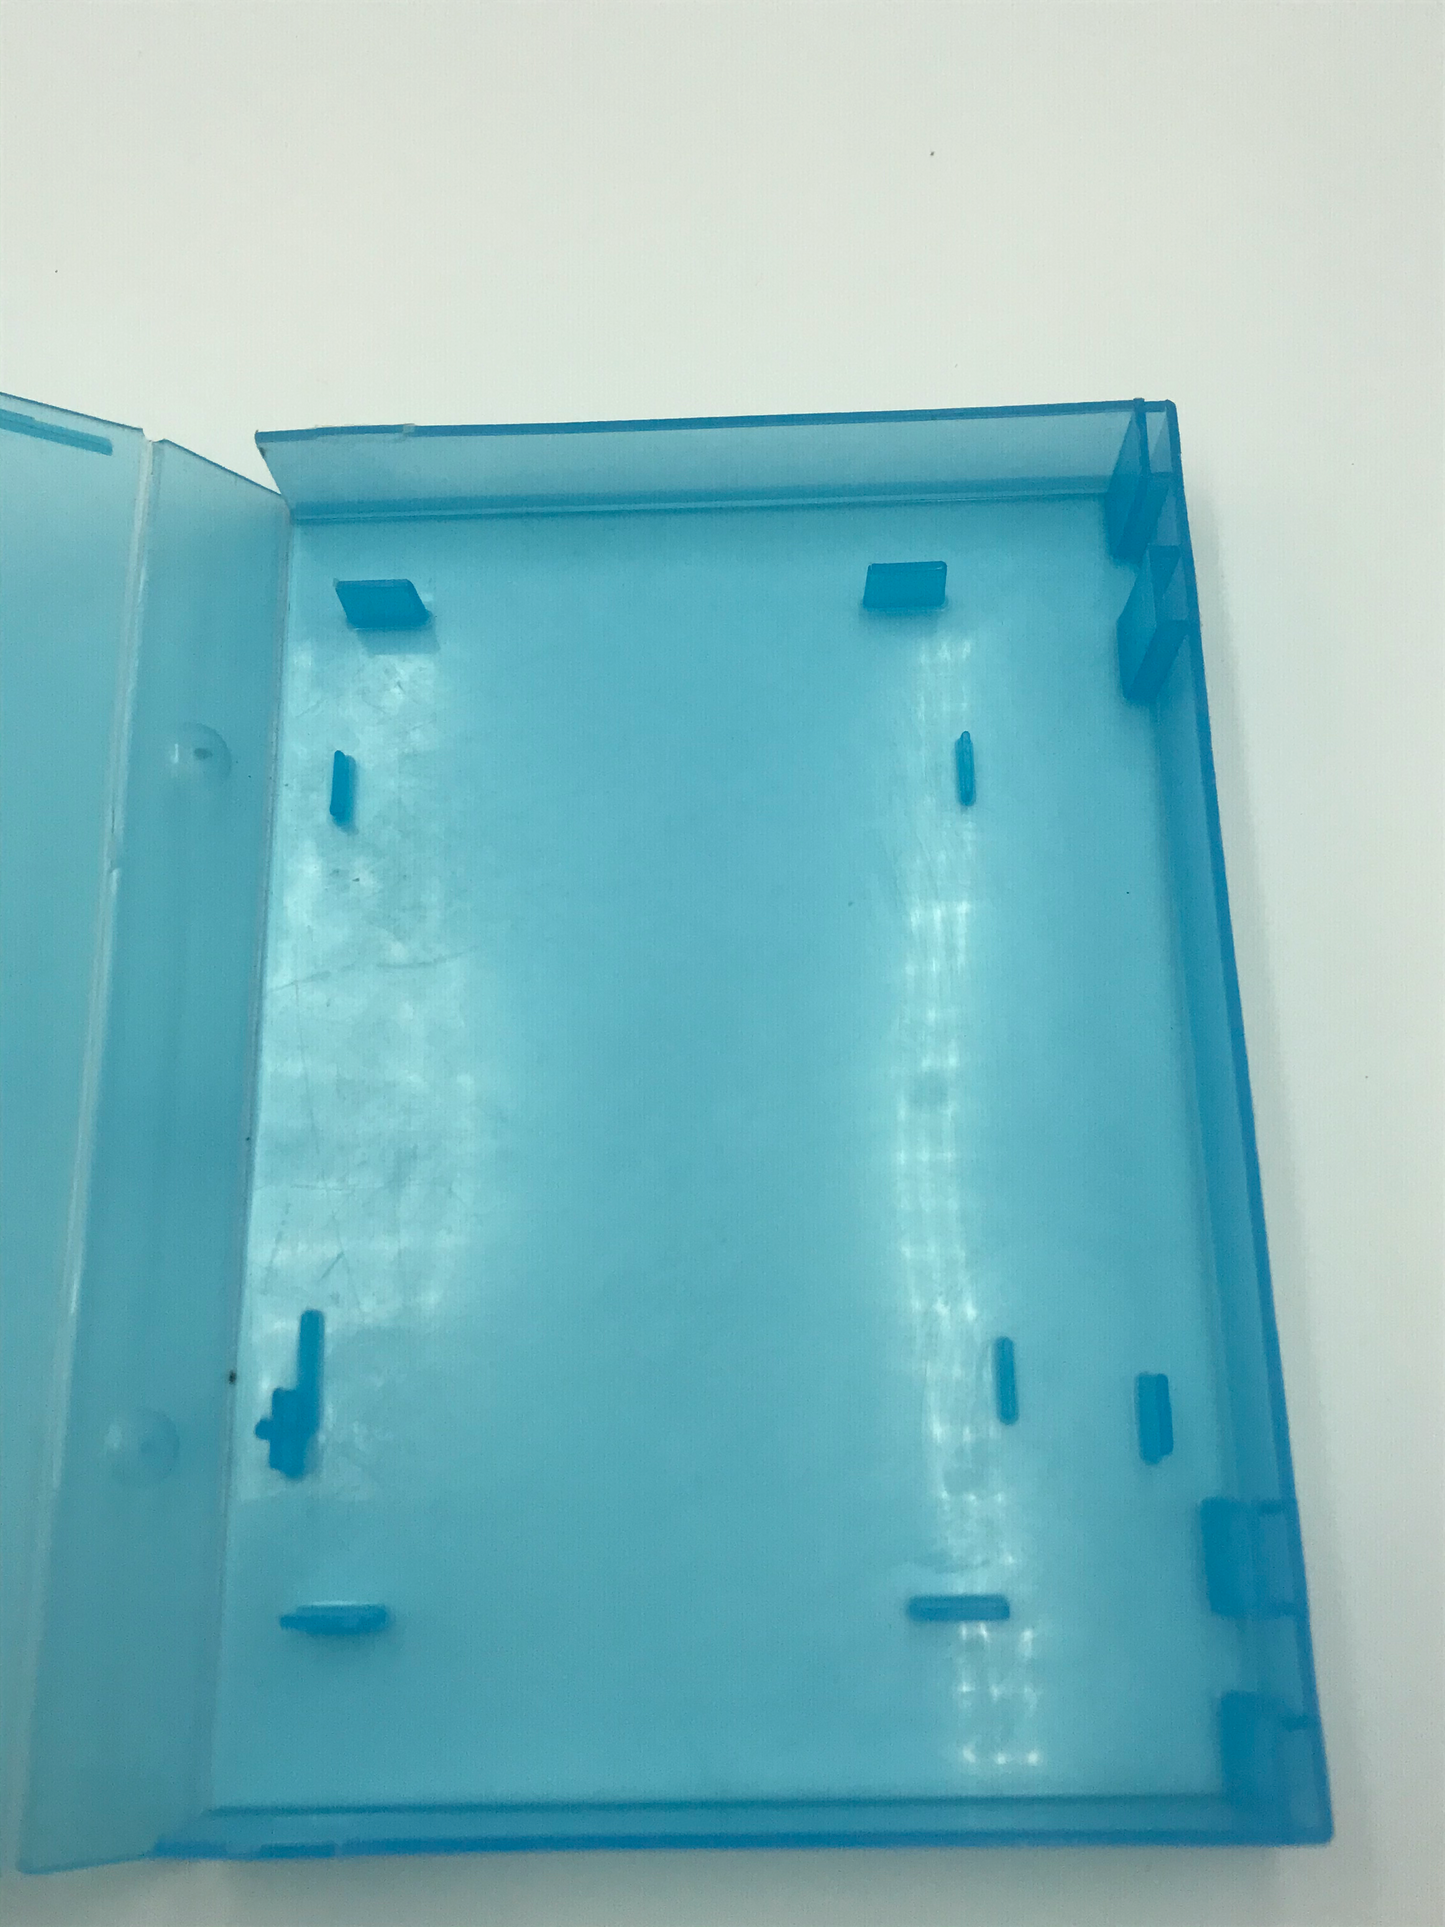 Cartridge Case | Official Clear Blue - SNES